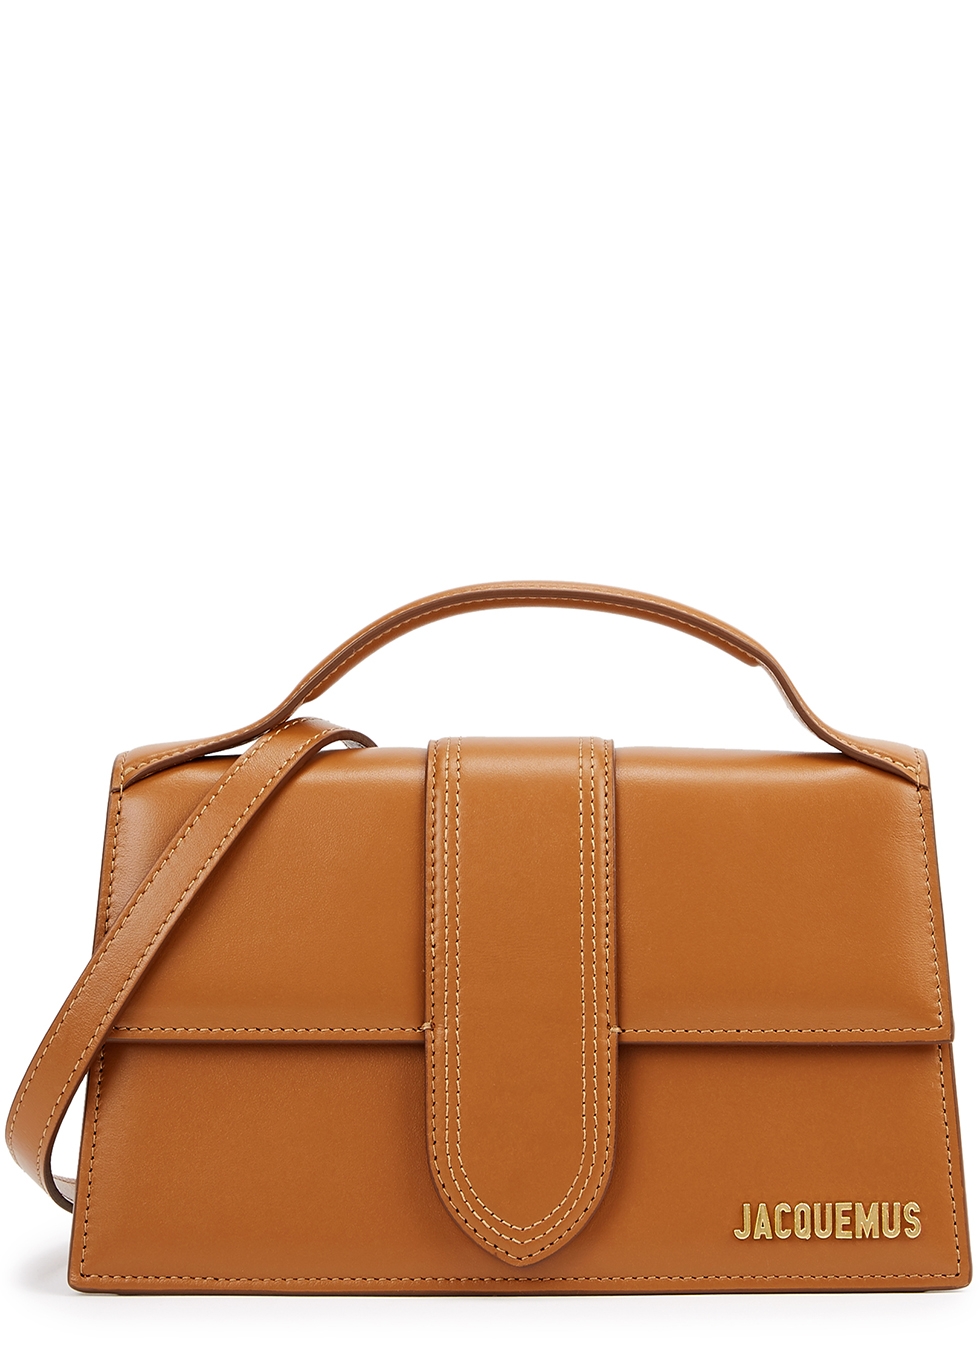 Jacquemus Le Grande Bambino light brown leather top handle bag